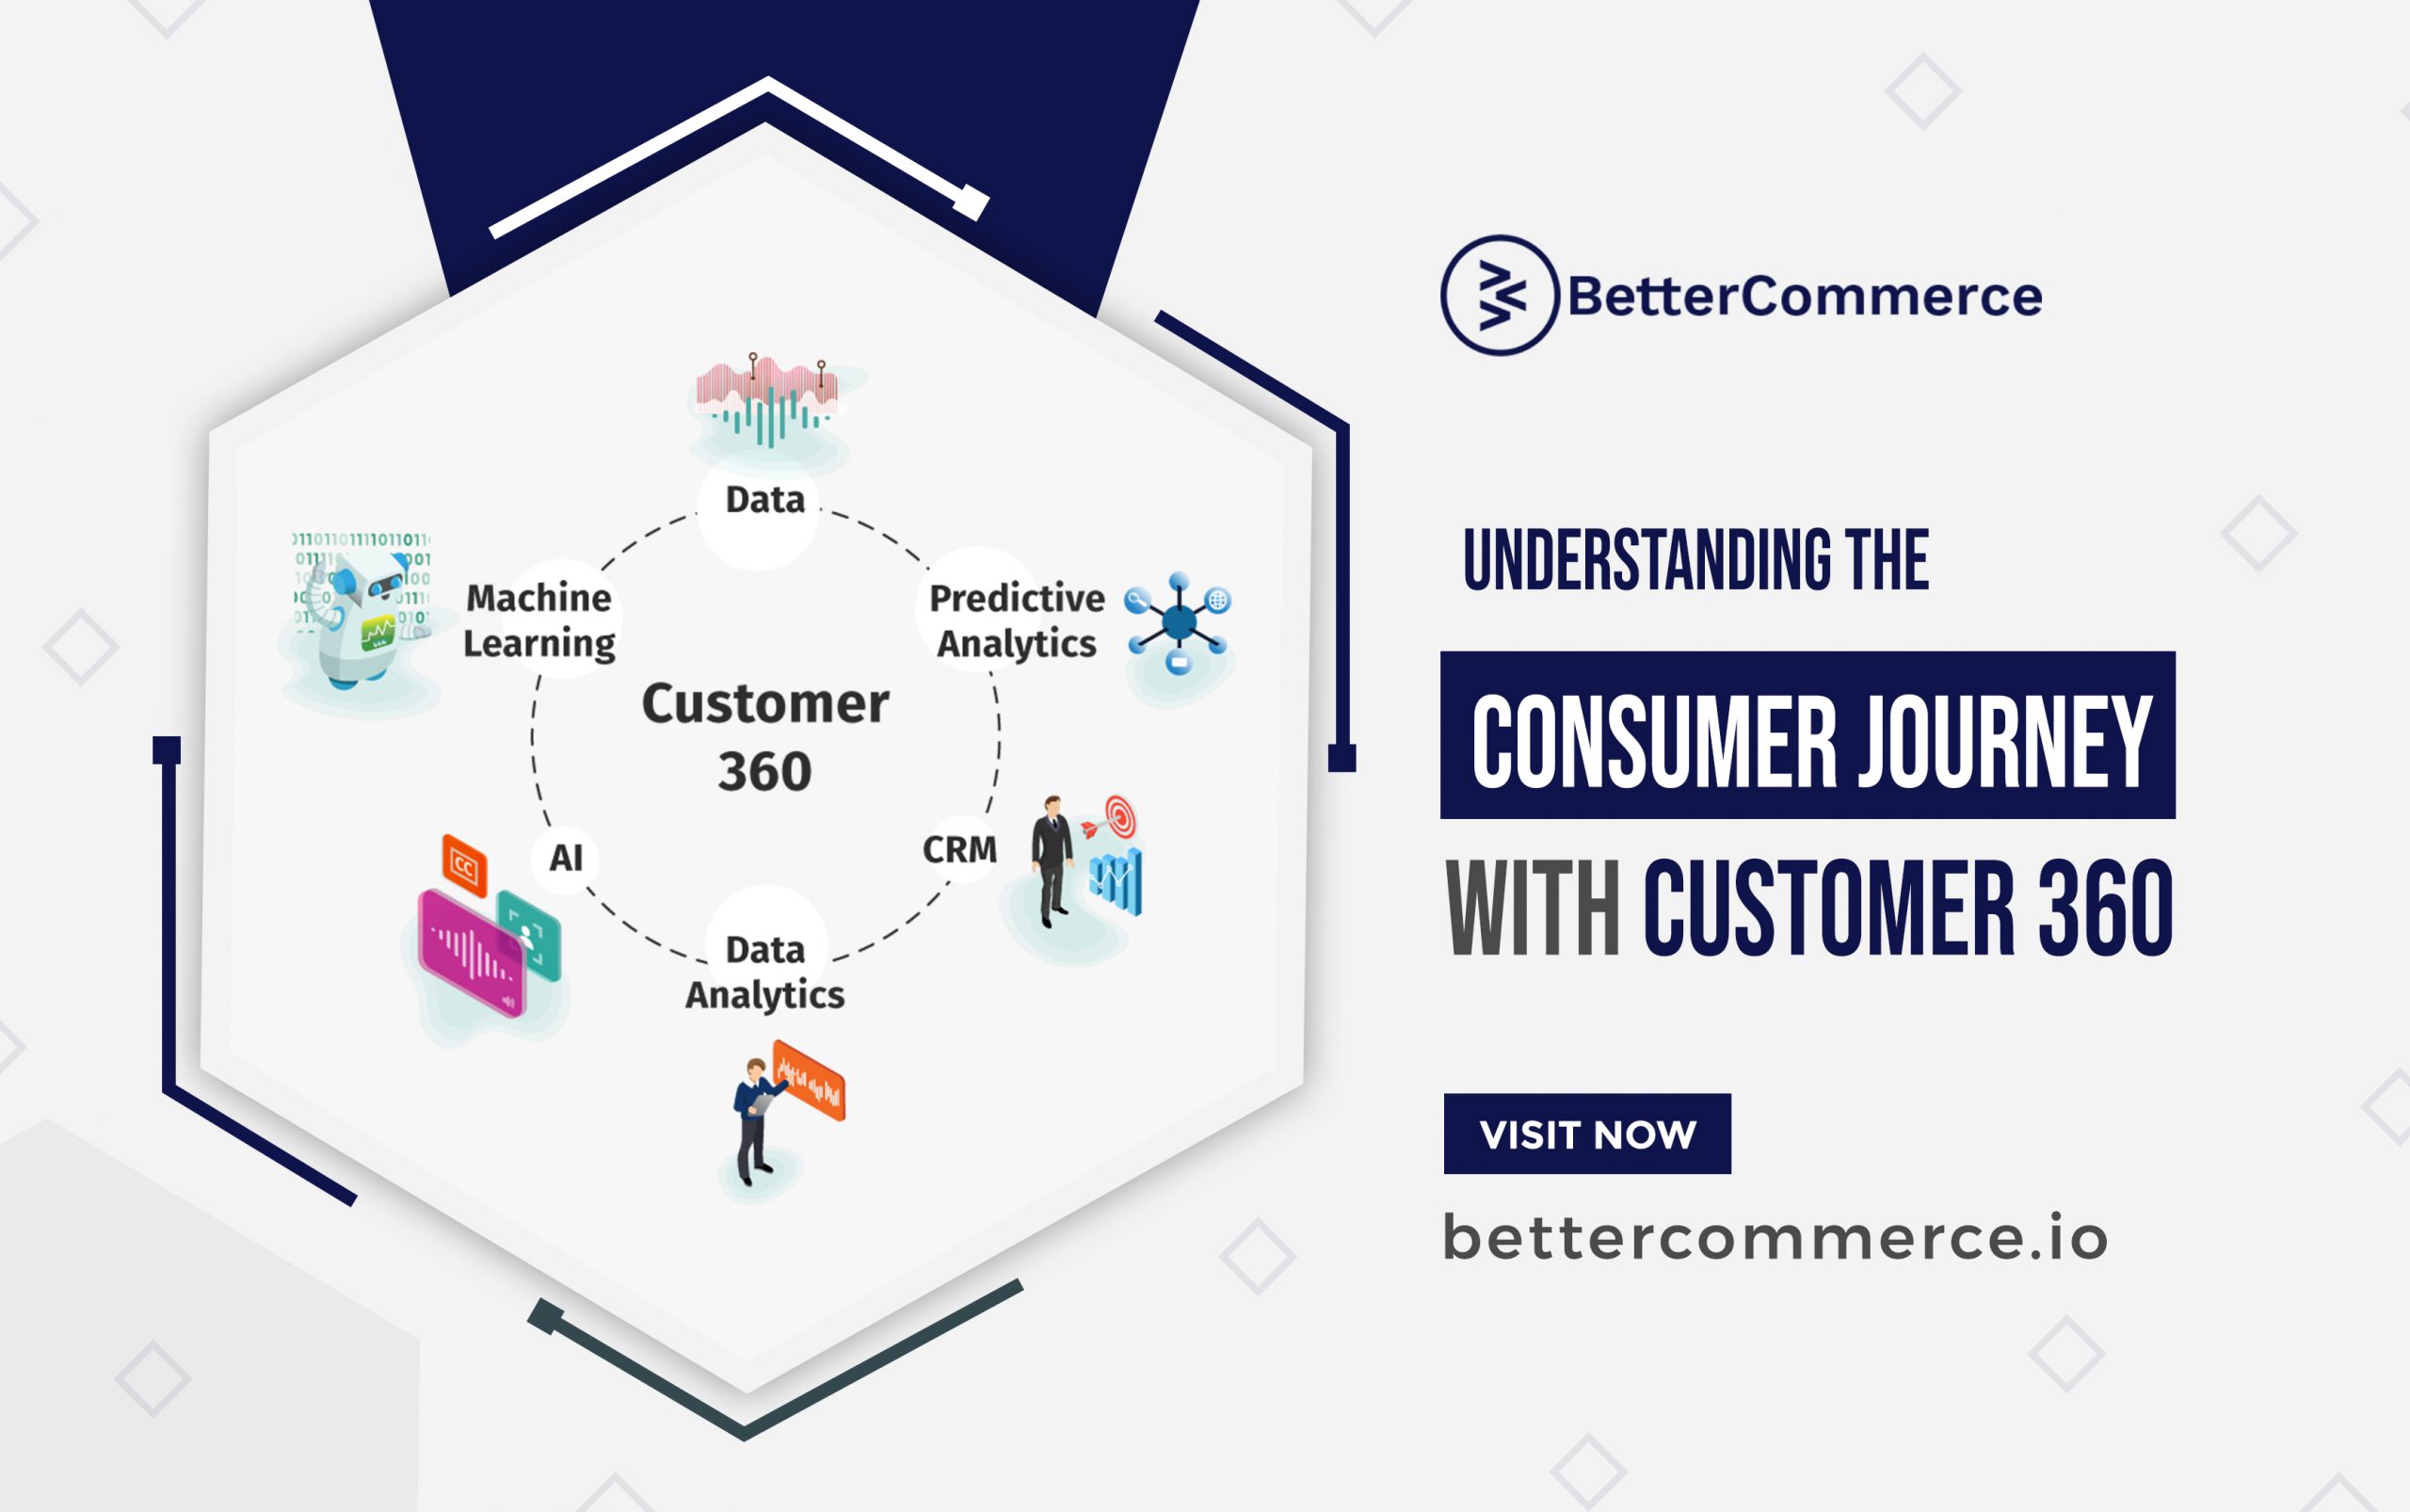 Understanding the Consumer Journey with Customer 360